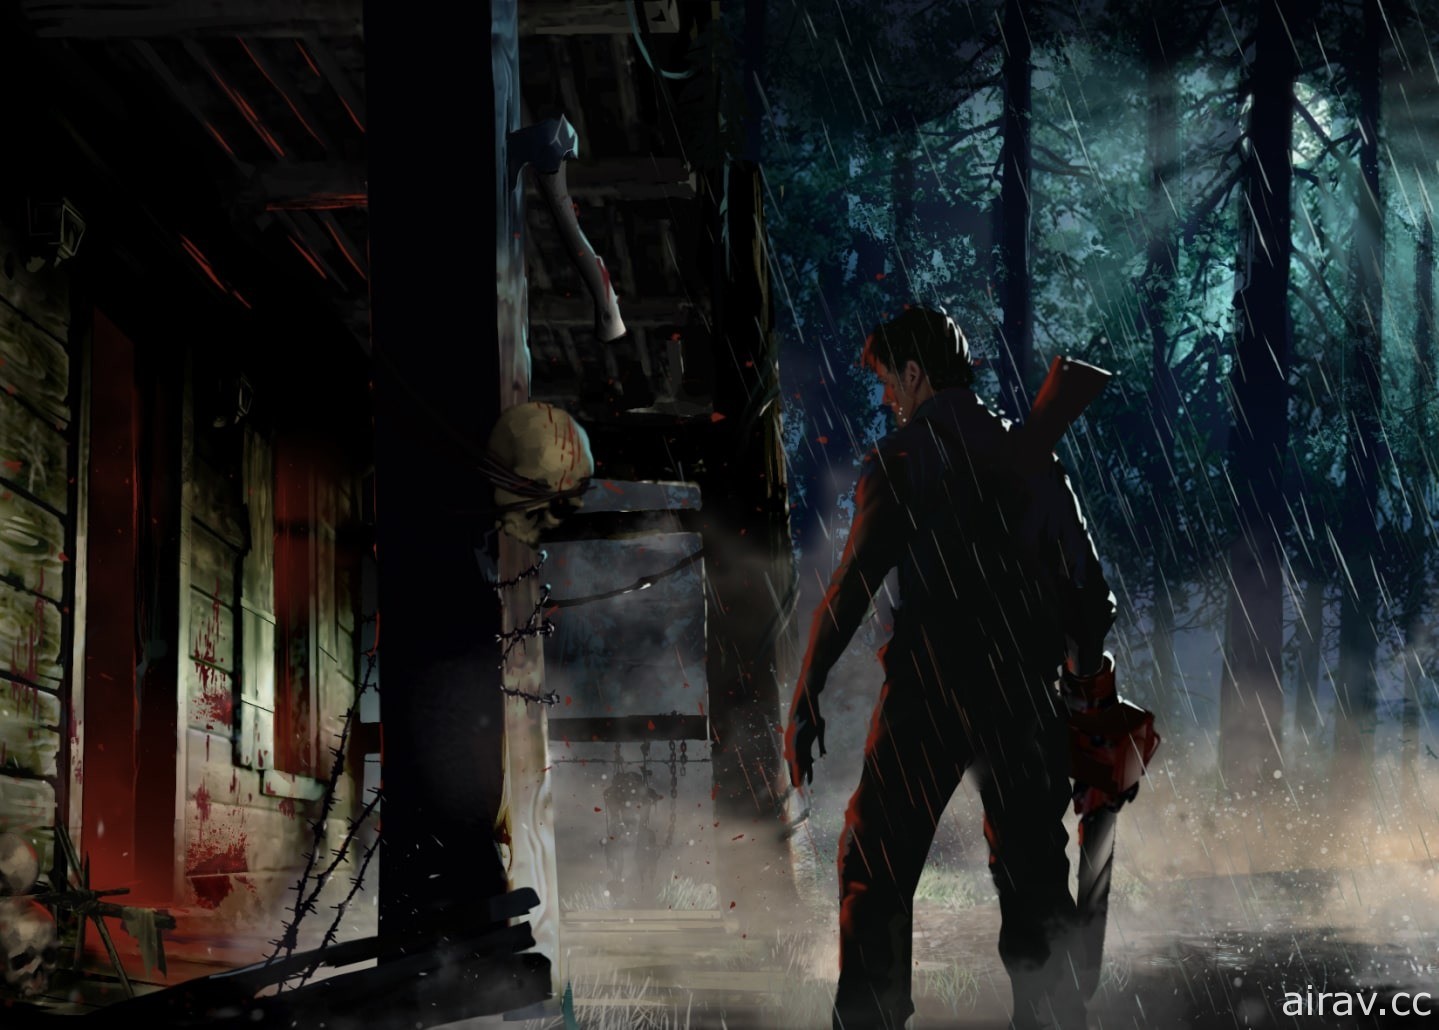 【E3 21】恐怖電影《屍變》同名遊戲公開實機影片 由「艾許」Bruce Campbell  親自介紹